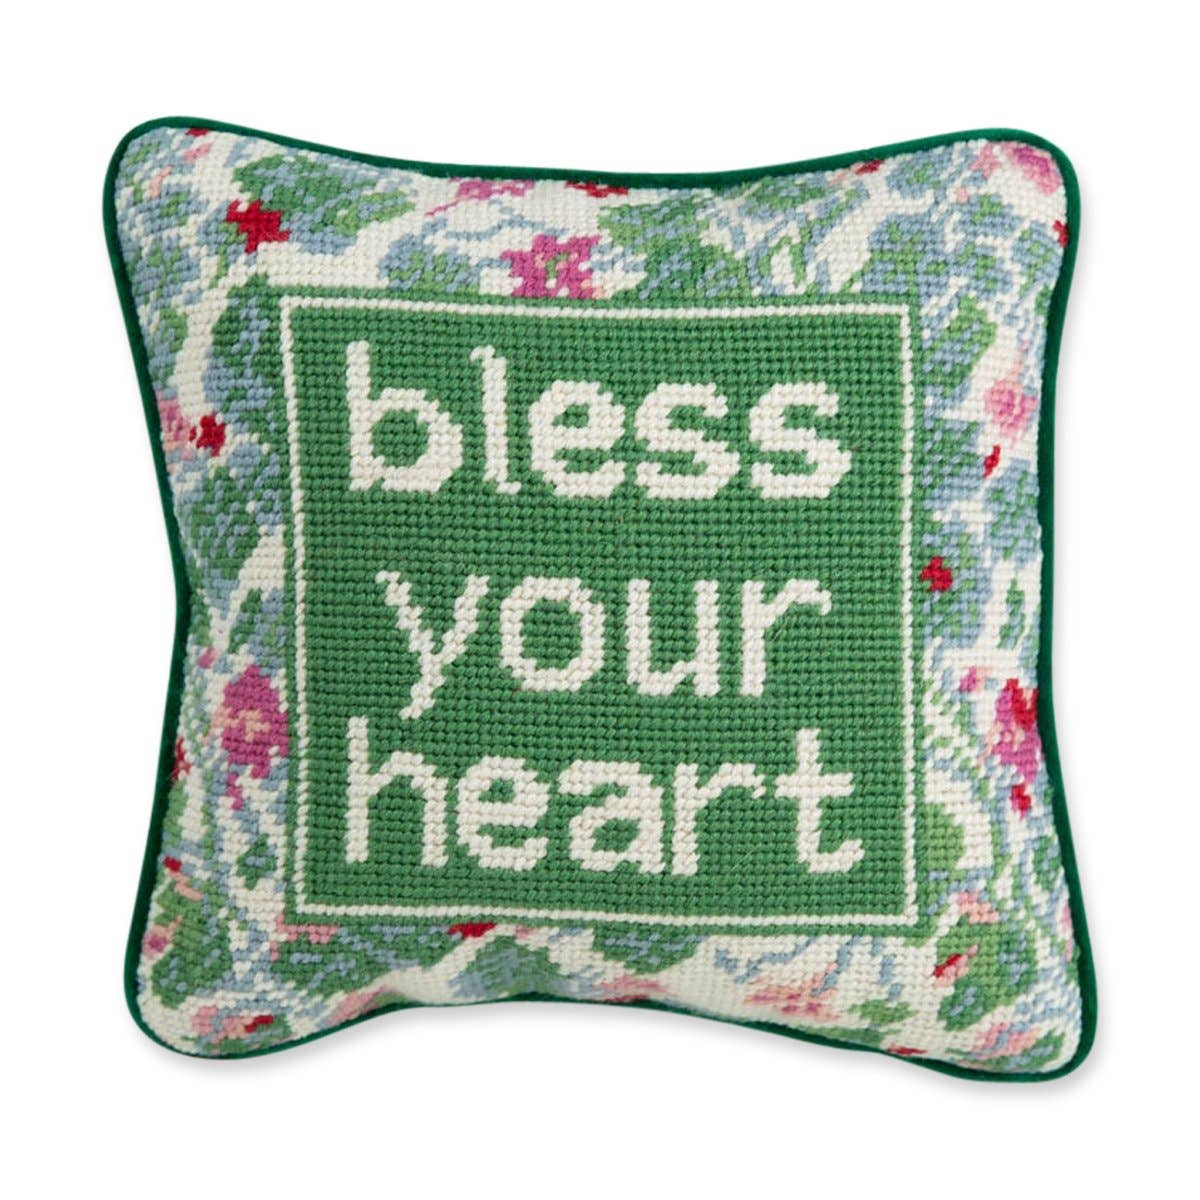 Furbish Studio - Bless Your Heart Needlepoint Pillow